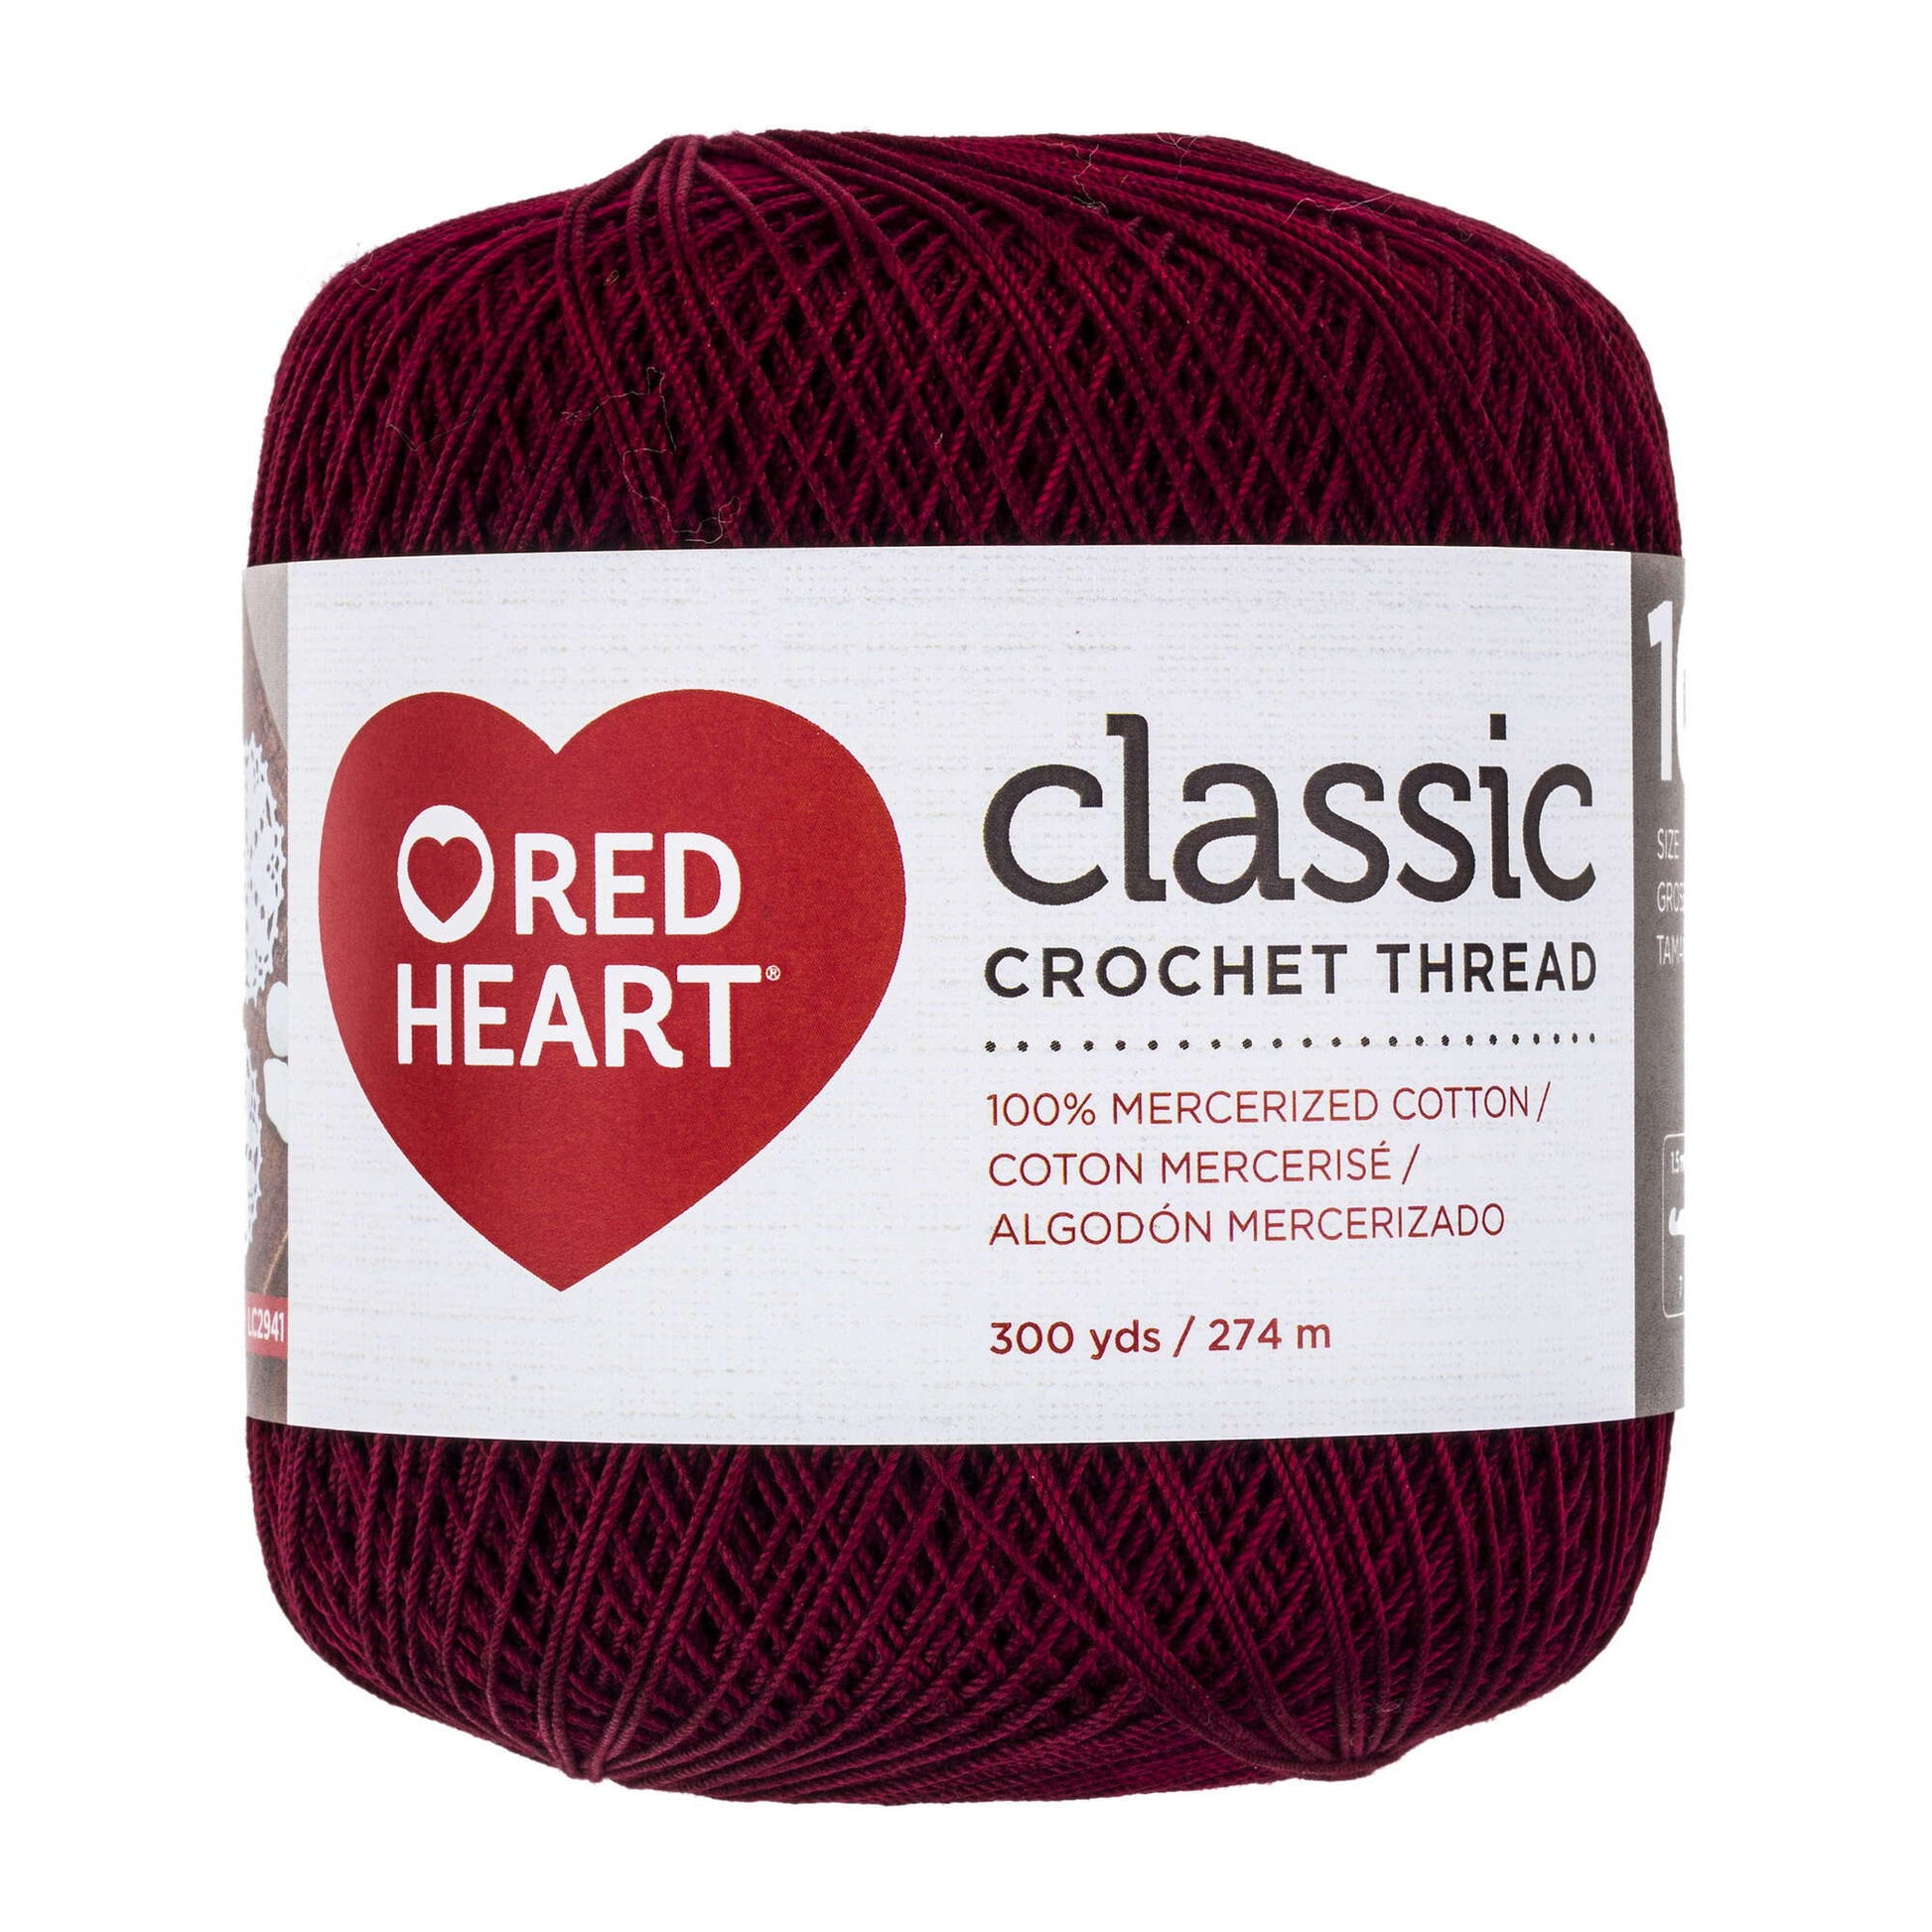 Red Heart Classic Crochet Thread Size 10